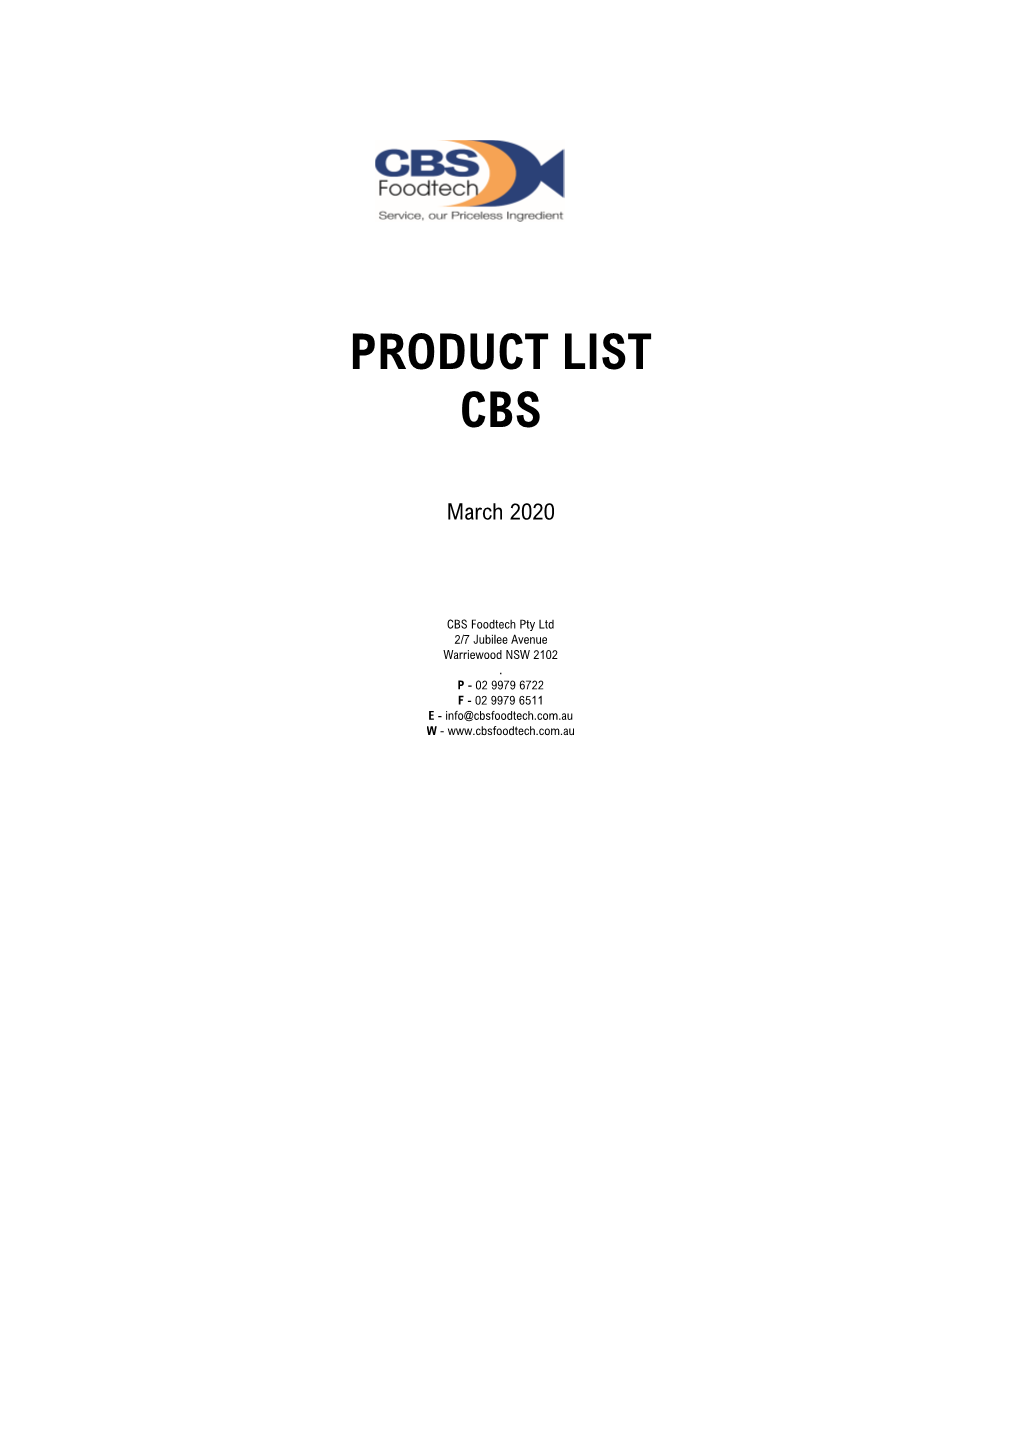 Product List Cbs